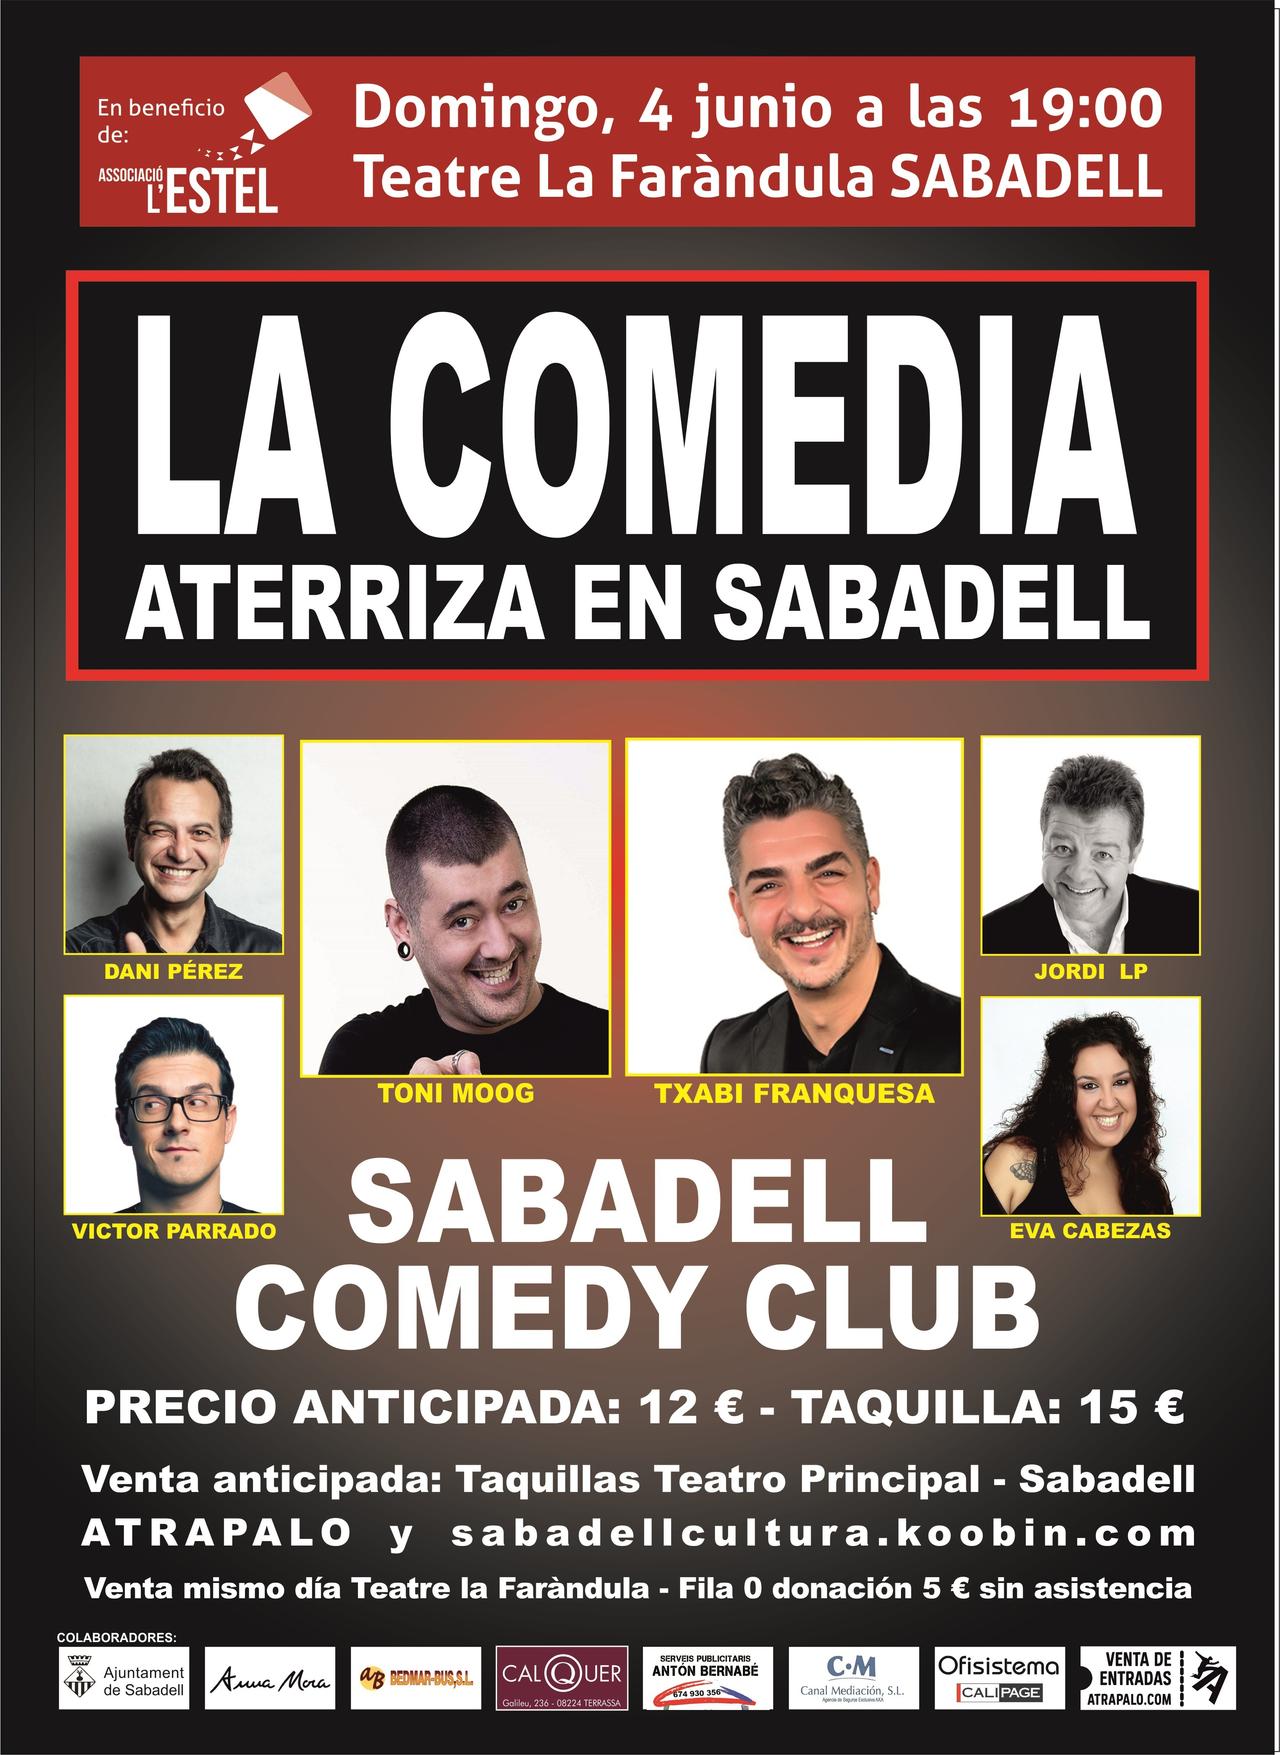 Sabadell Comedy Club